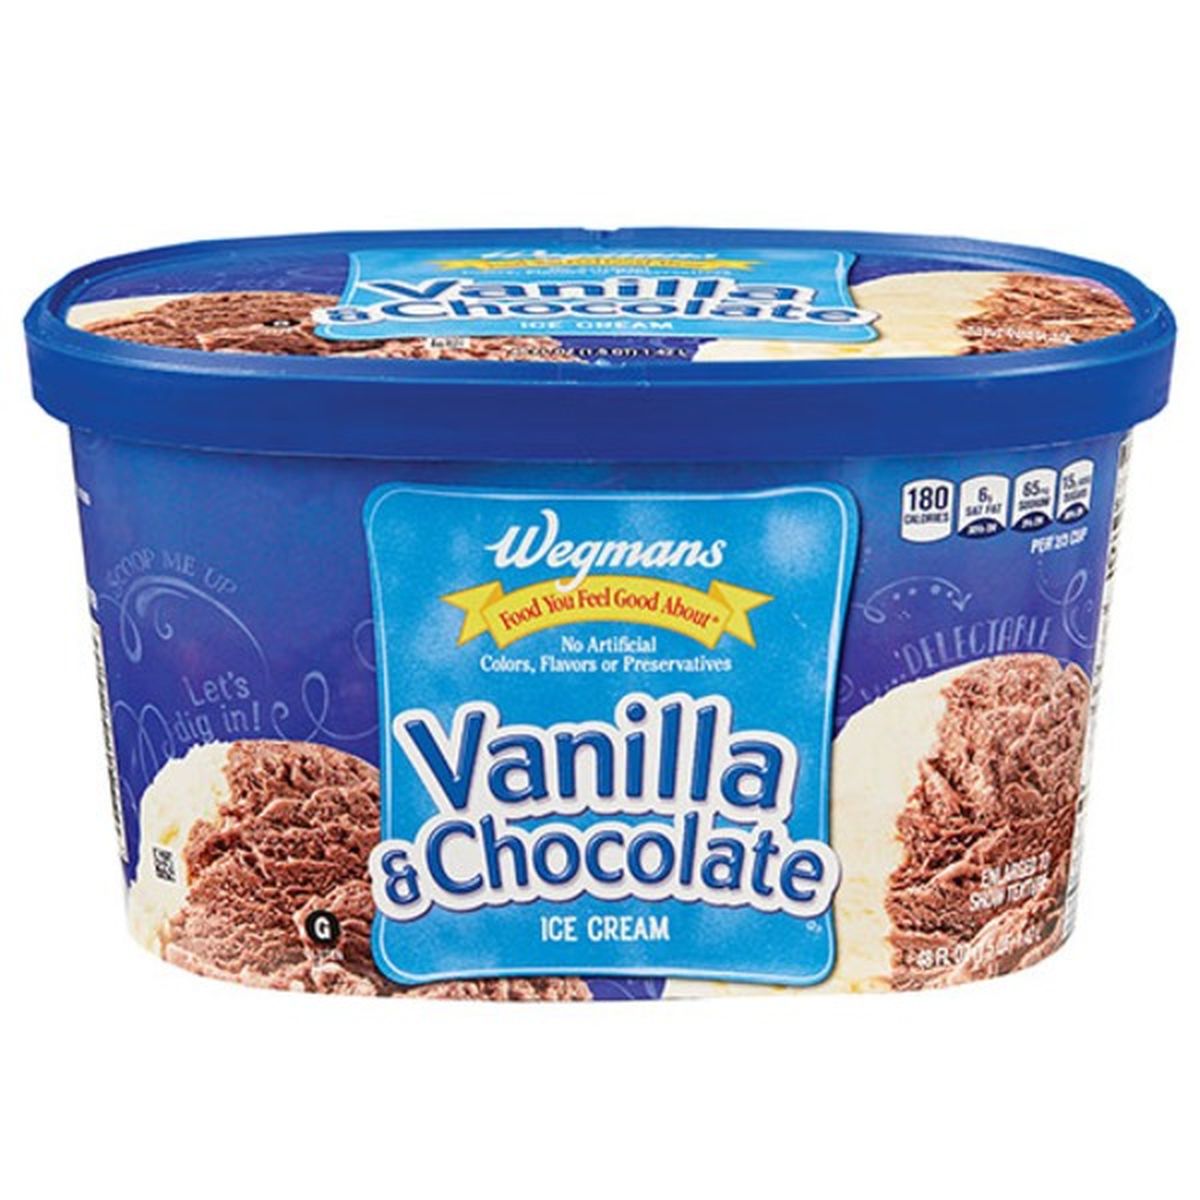 Calories in Wegmans Vanilla & Chocolate Ice Cream